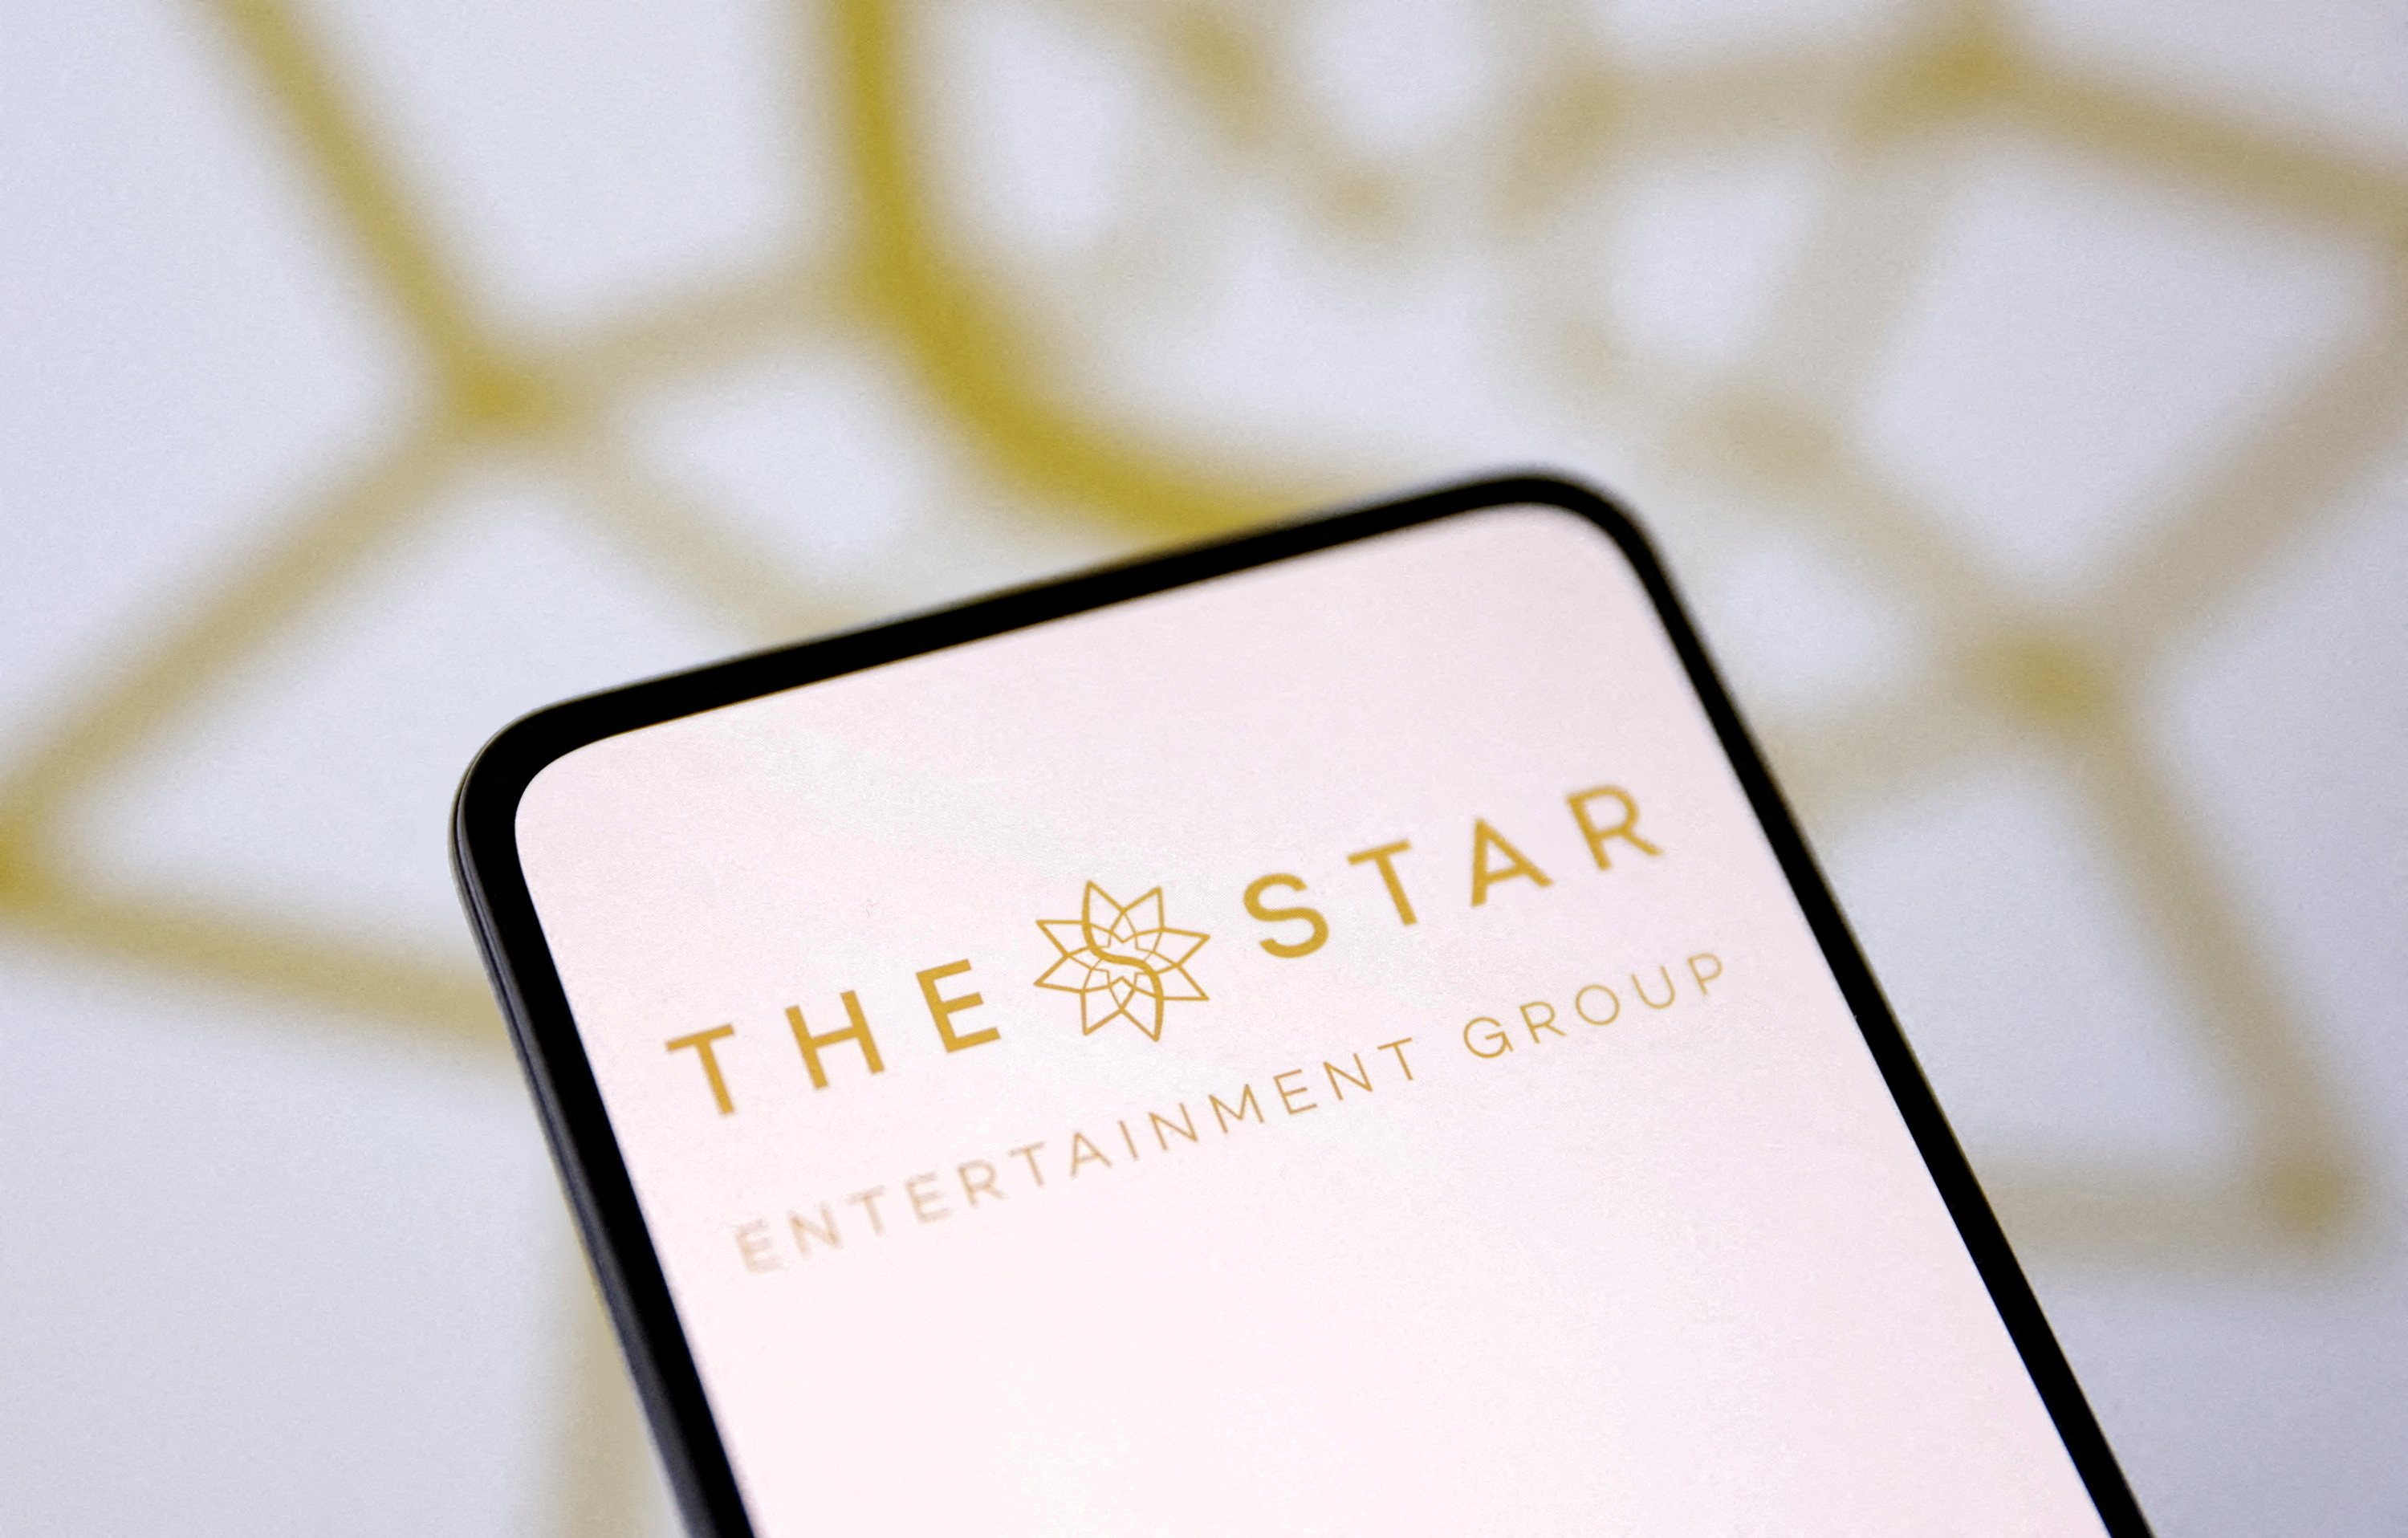 Illustration shows Star Entertainment logo